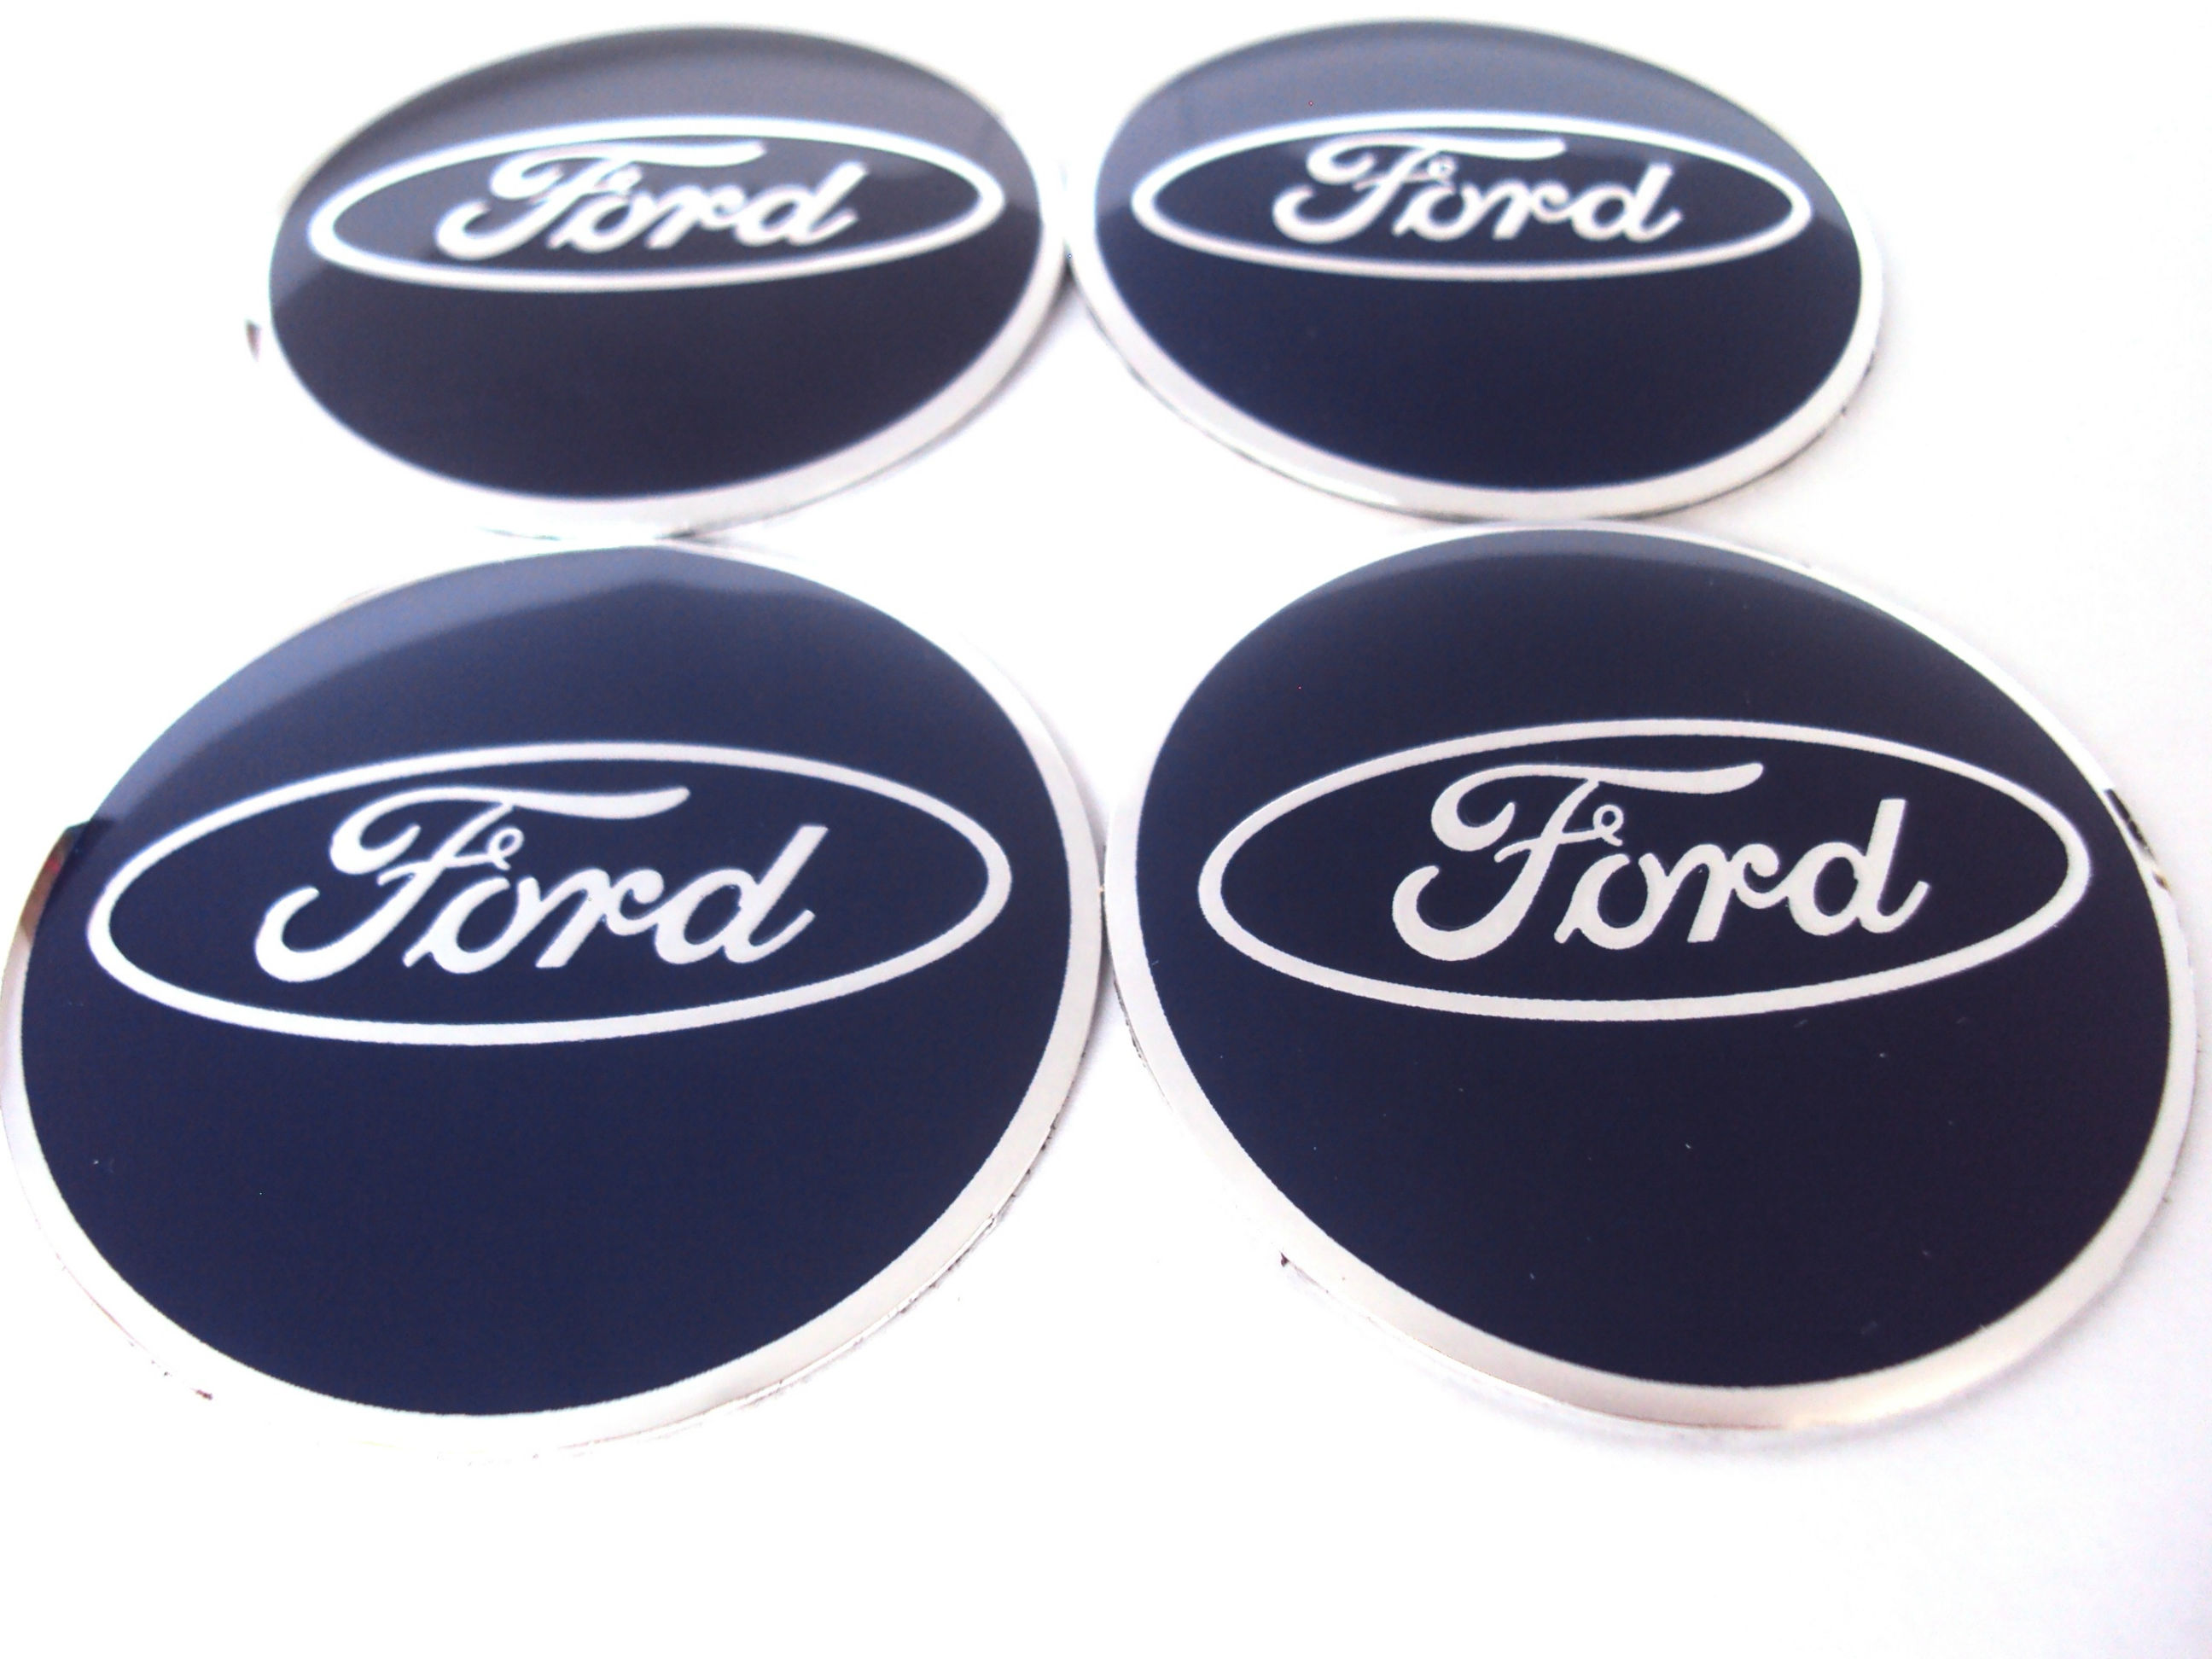 Купить логотип на диски. Наклейки Ford 80 мм на колпачки литых дисков. Наклейки на колпачки дисков Форд 60 мм синий. Наклейки Форд на колеса колесные диски колёса наклейка колпак Ford d-60mm. Наклейки на колпачки литых дисков 56 мм Форд Мондео.